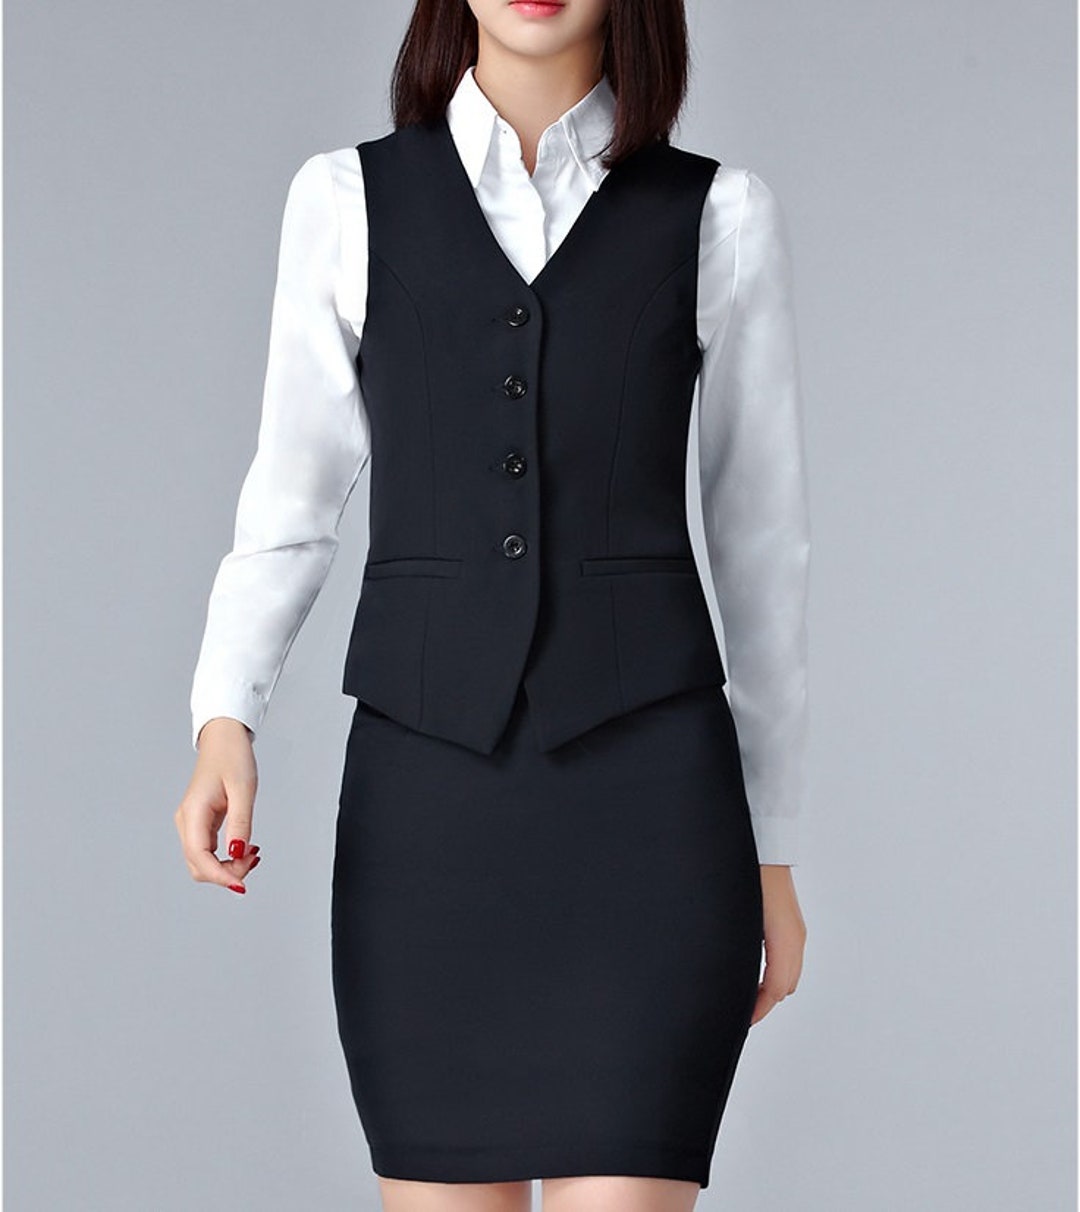 Vocni Women's Fully Lined 4 Button V-Neck Economy Dressy Suit Vest  Waistcoat ,Black,US M ,(Asian 3XL)